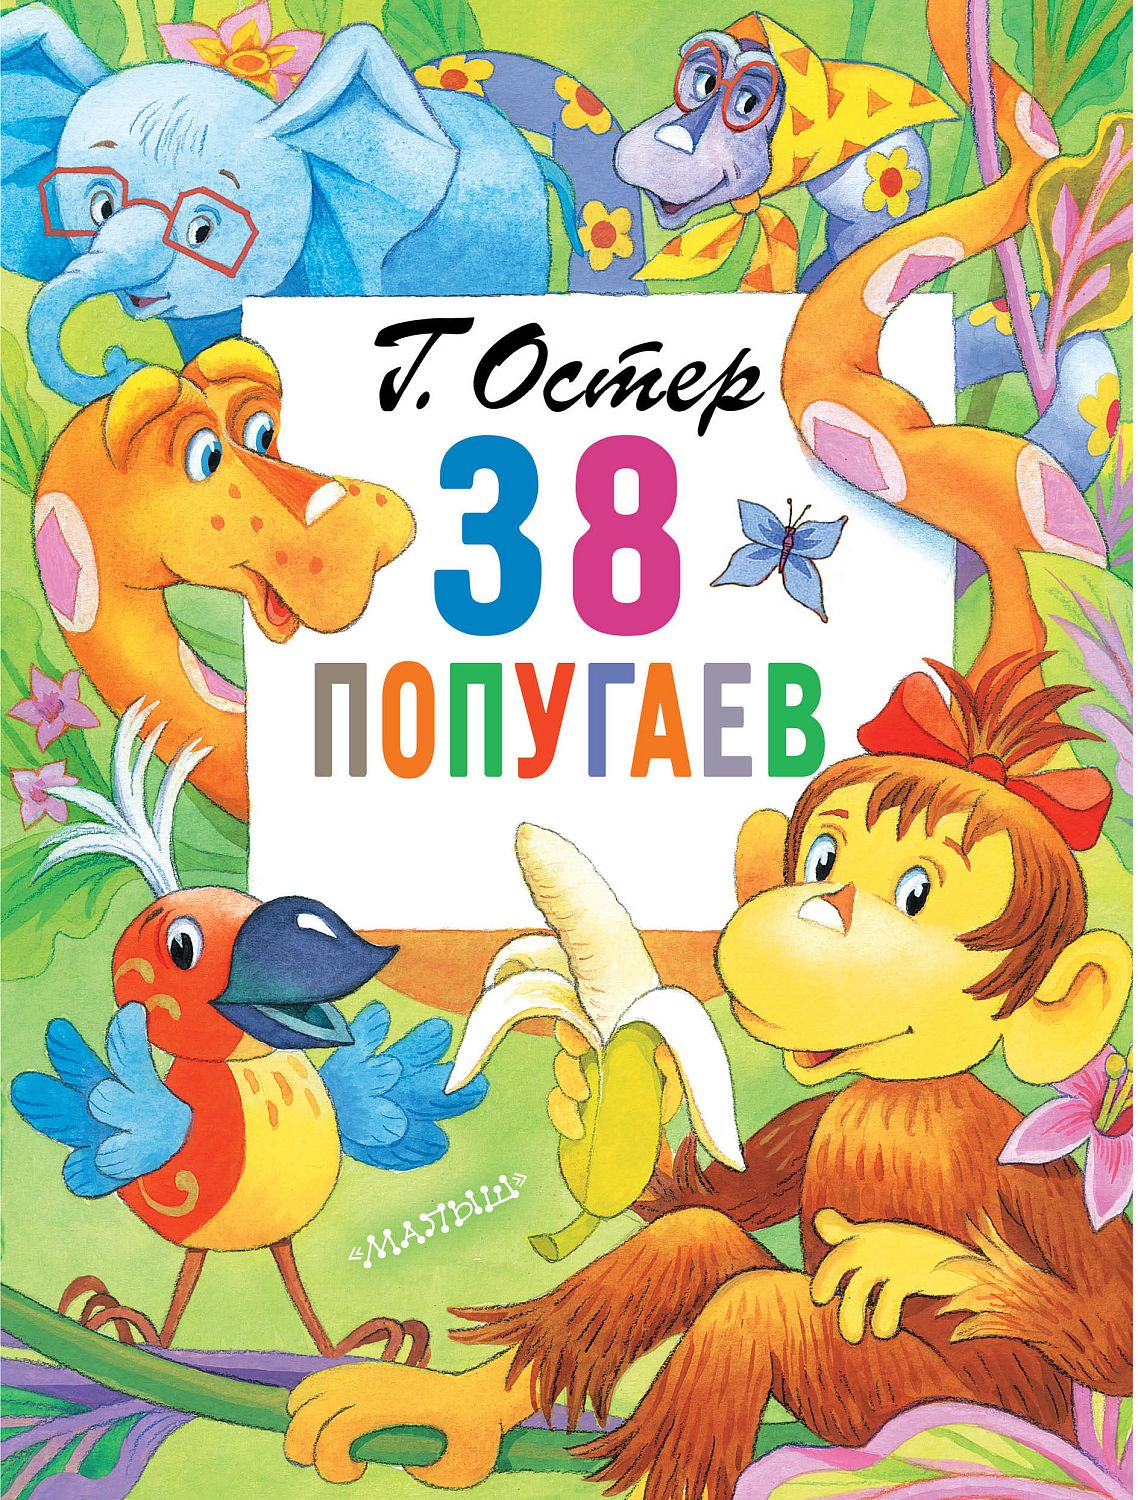 АСТ ГлавКнигиДетей/38 попугаев